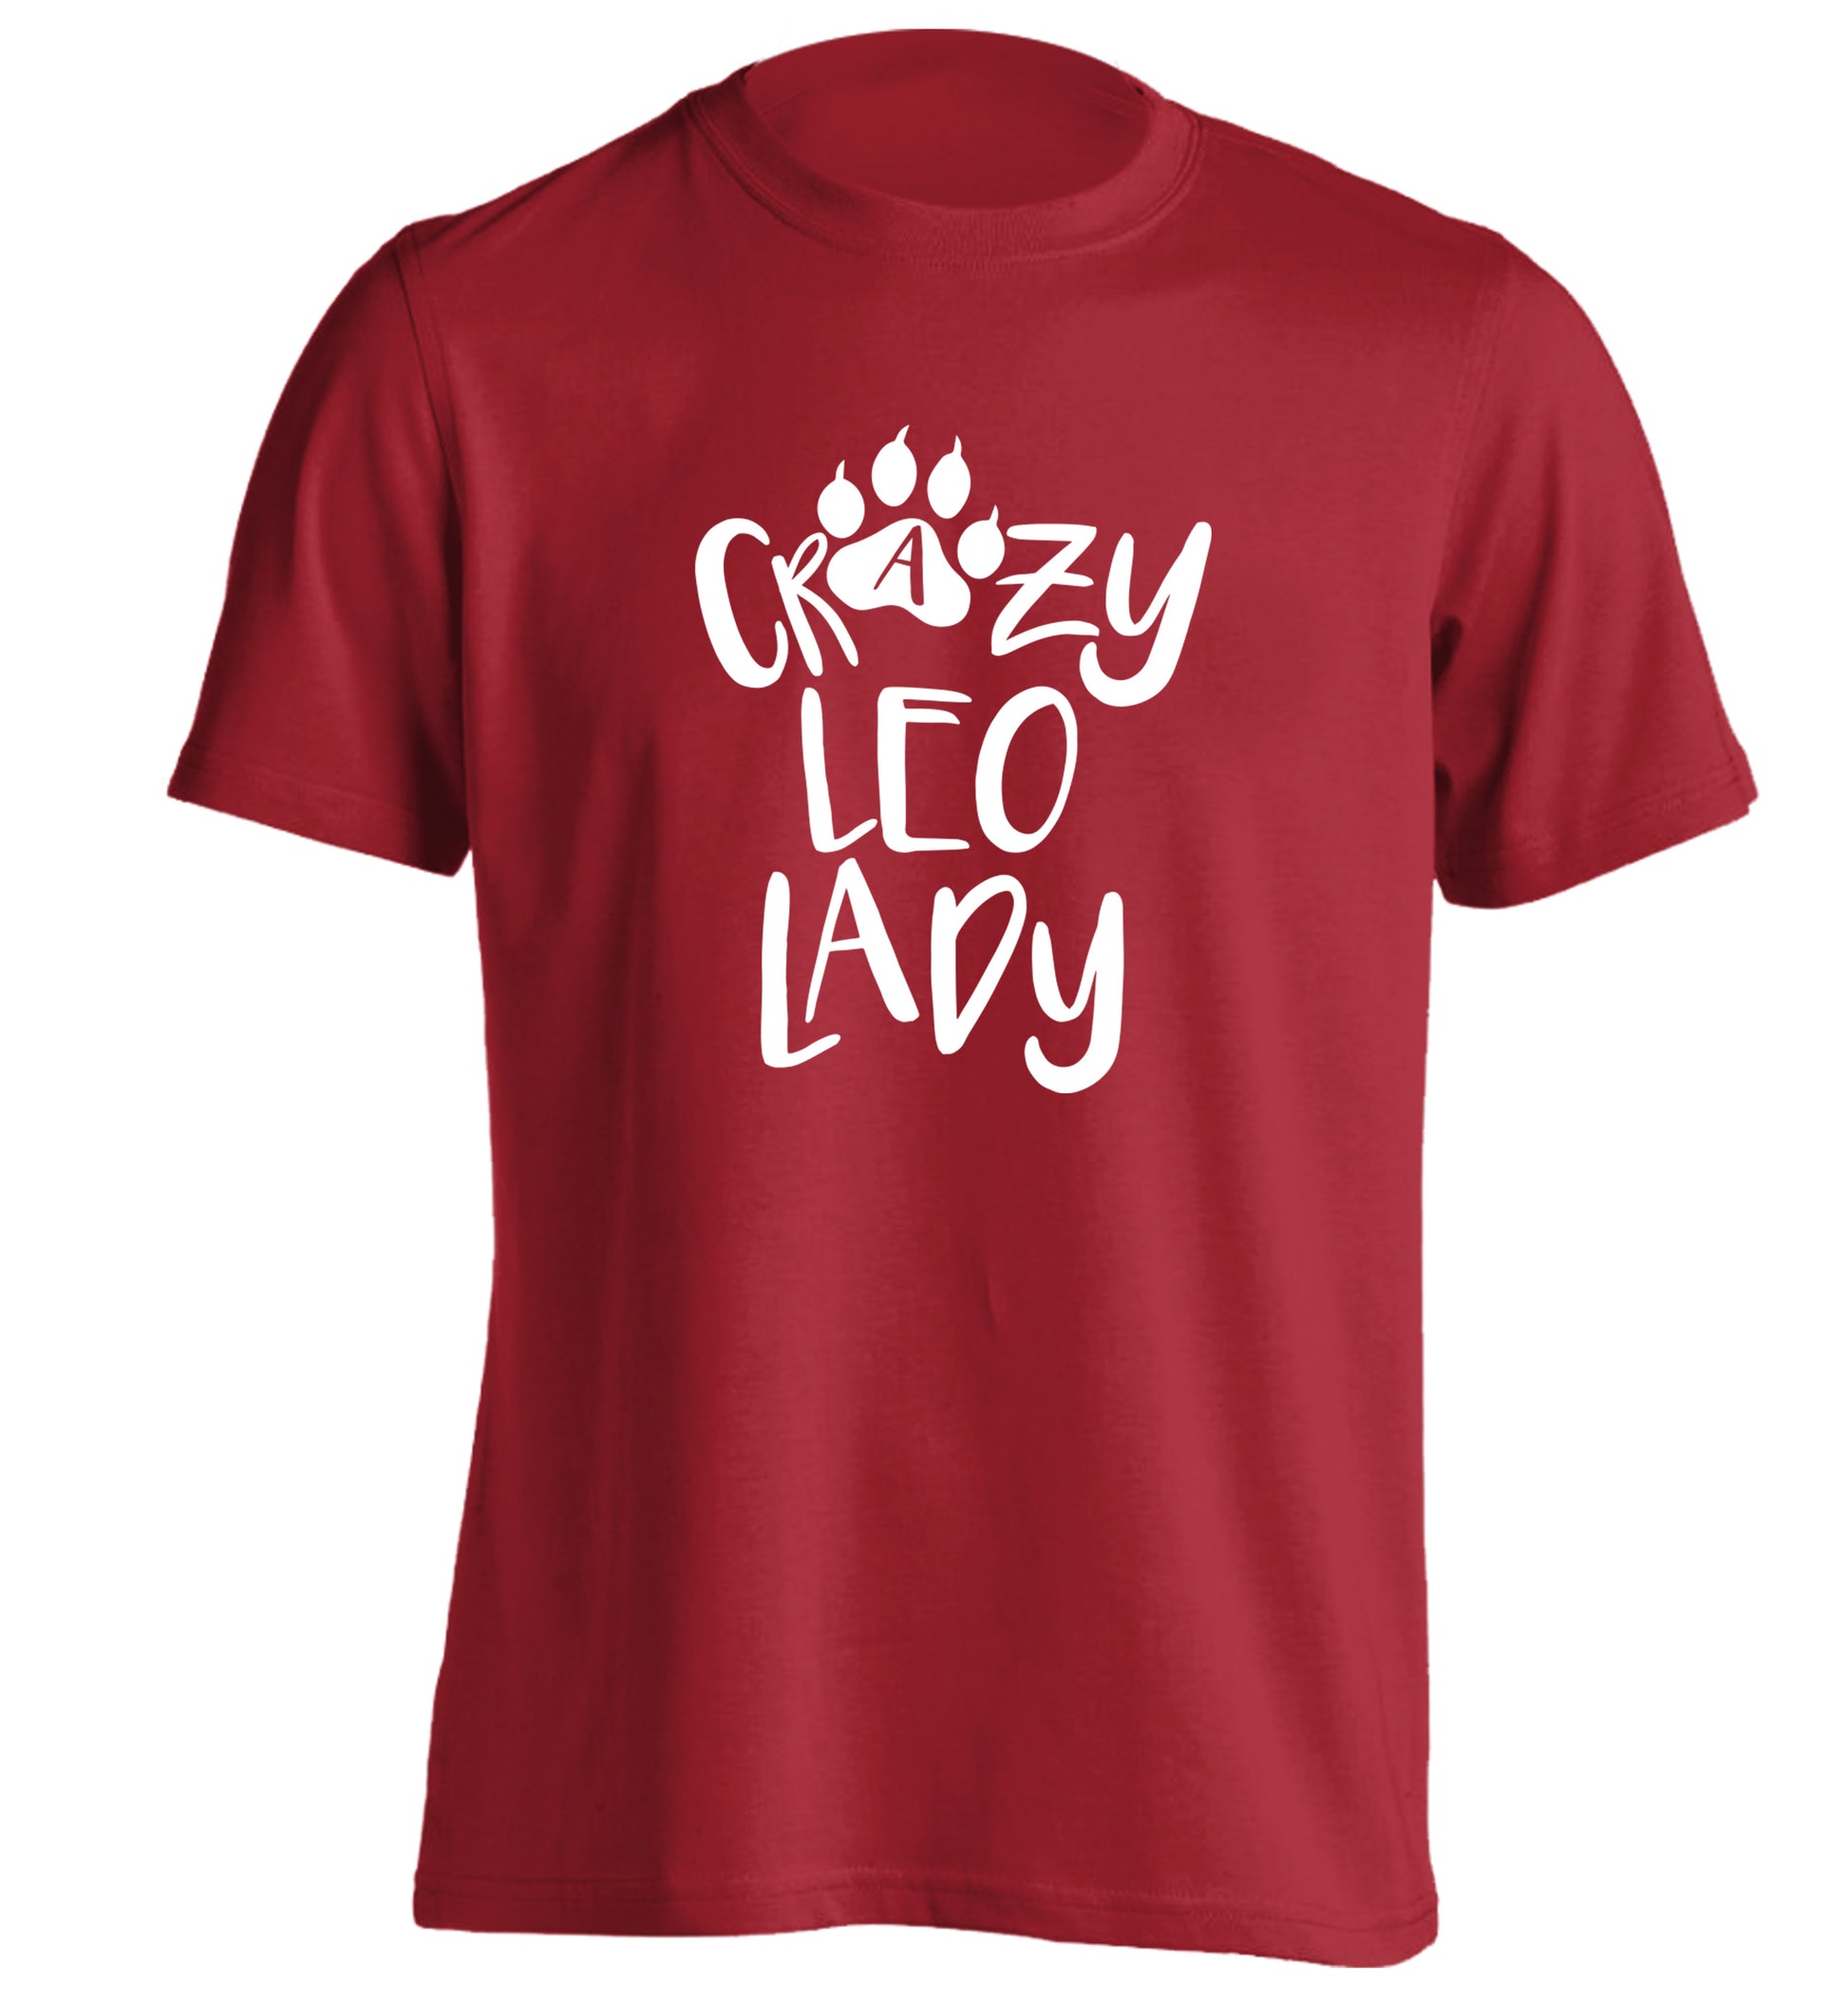 Crazy leo lady adults unisex red Tshirt 2XL